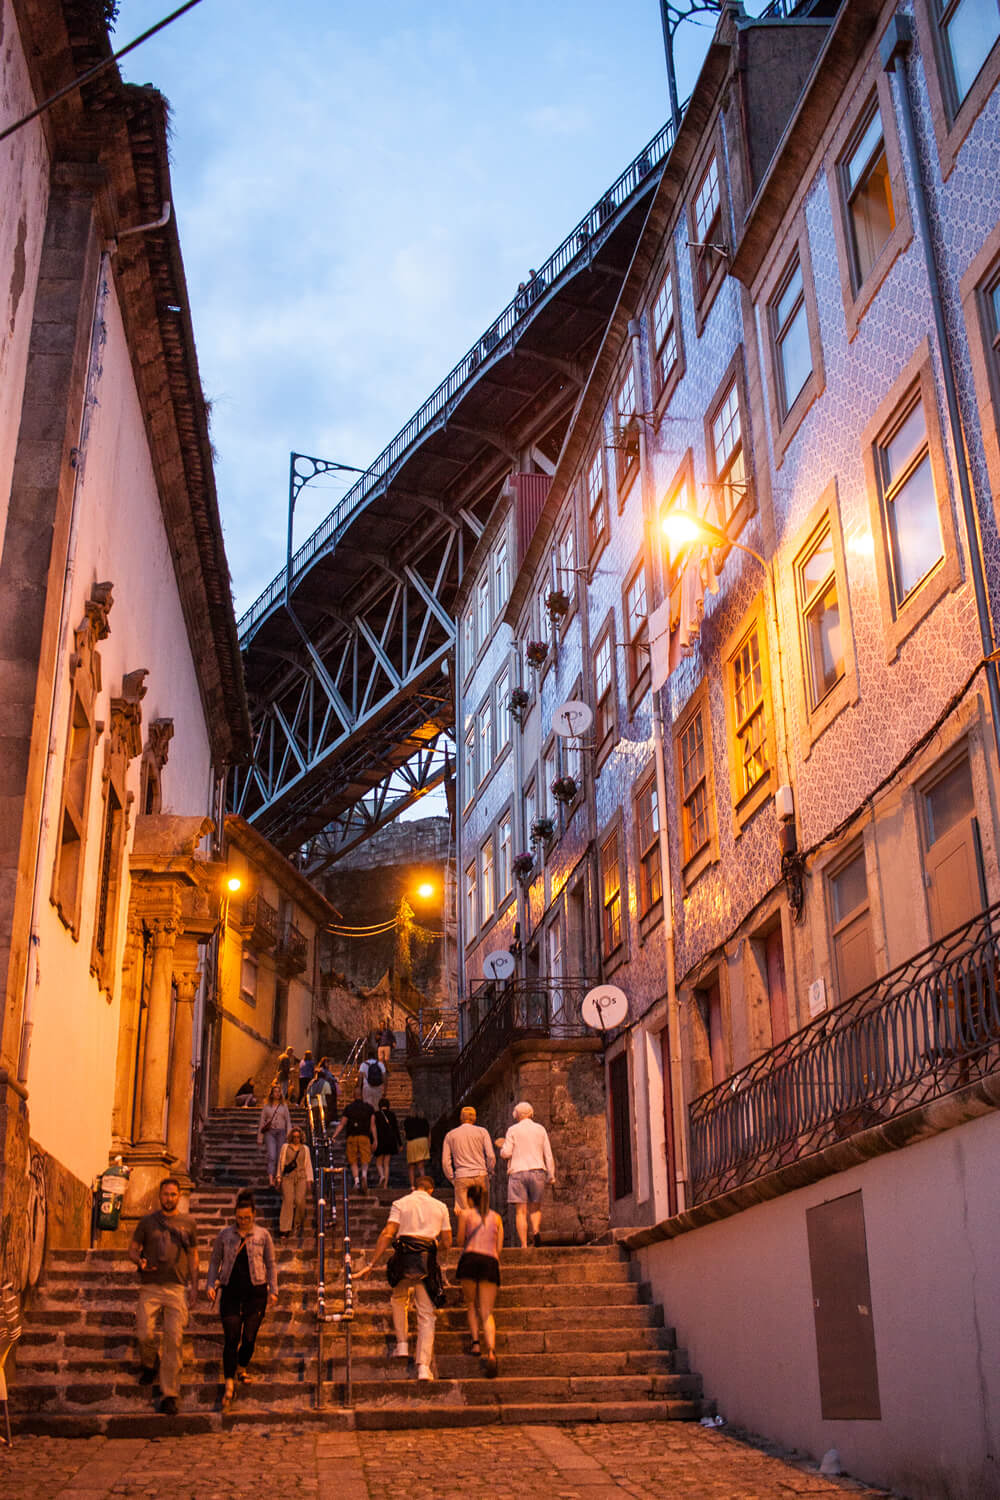 Steps in the Ribeira neighbourhood of Porto